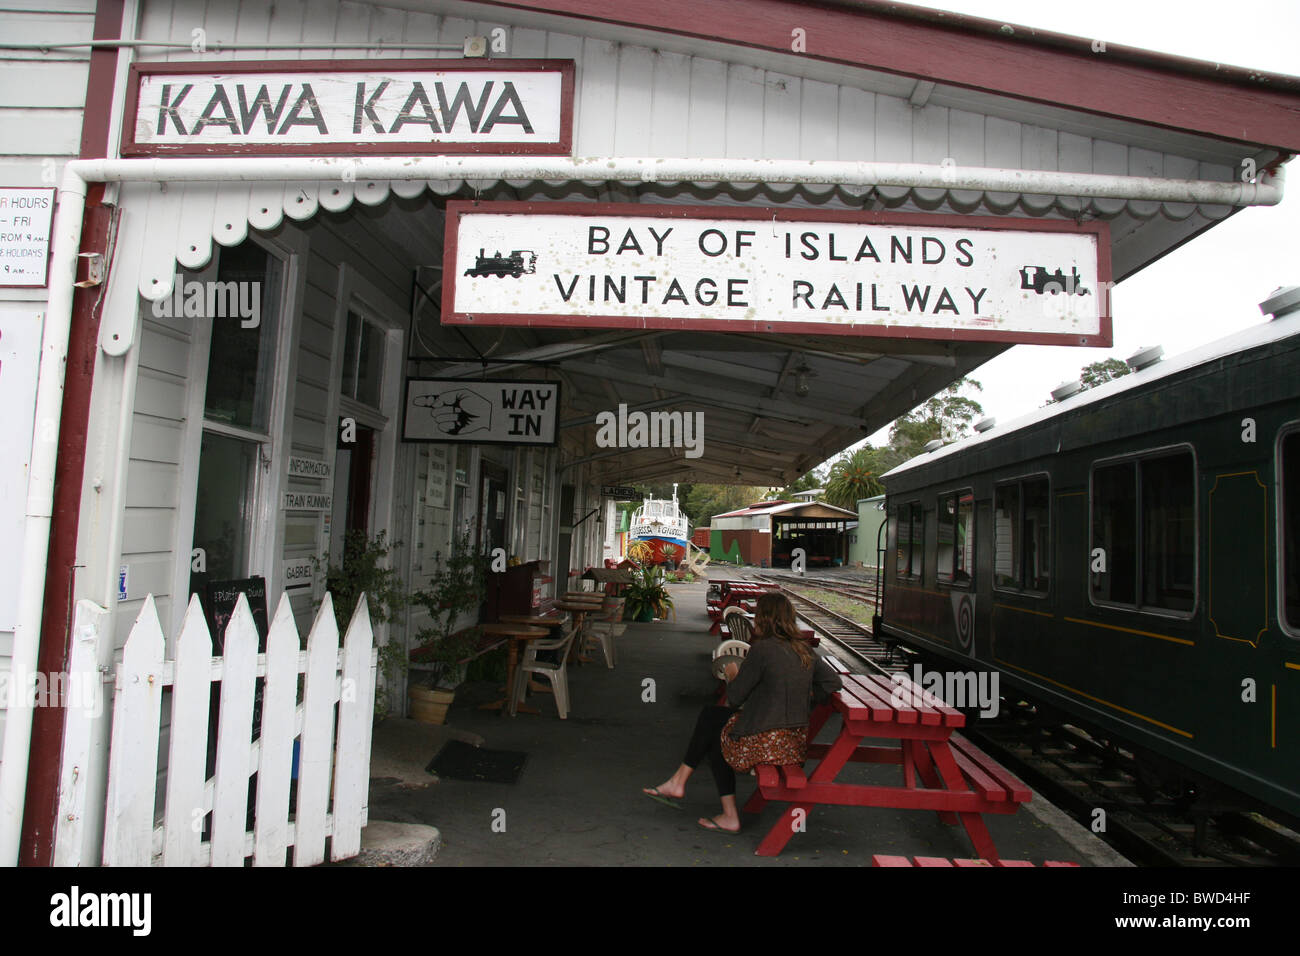 Bay of Islands Vintage Railway in Kawa Kawa (Kawakawa) in Northland New Zealand Stock Photo